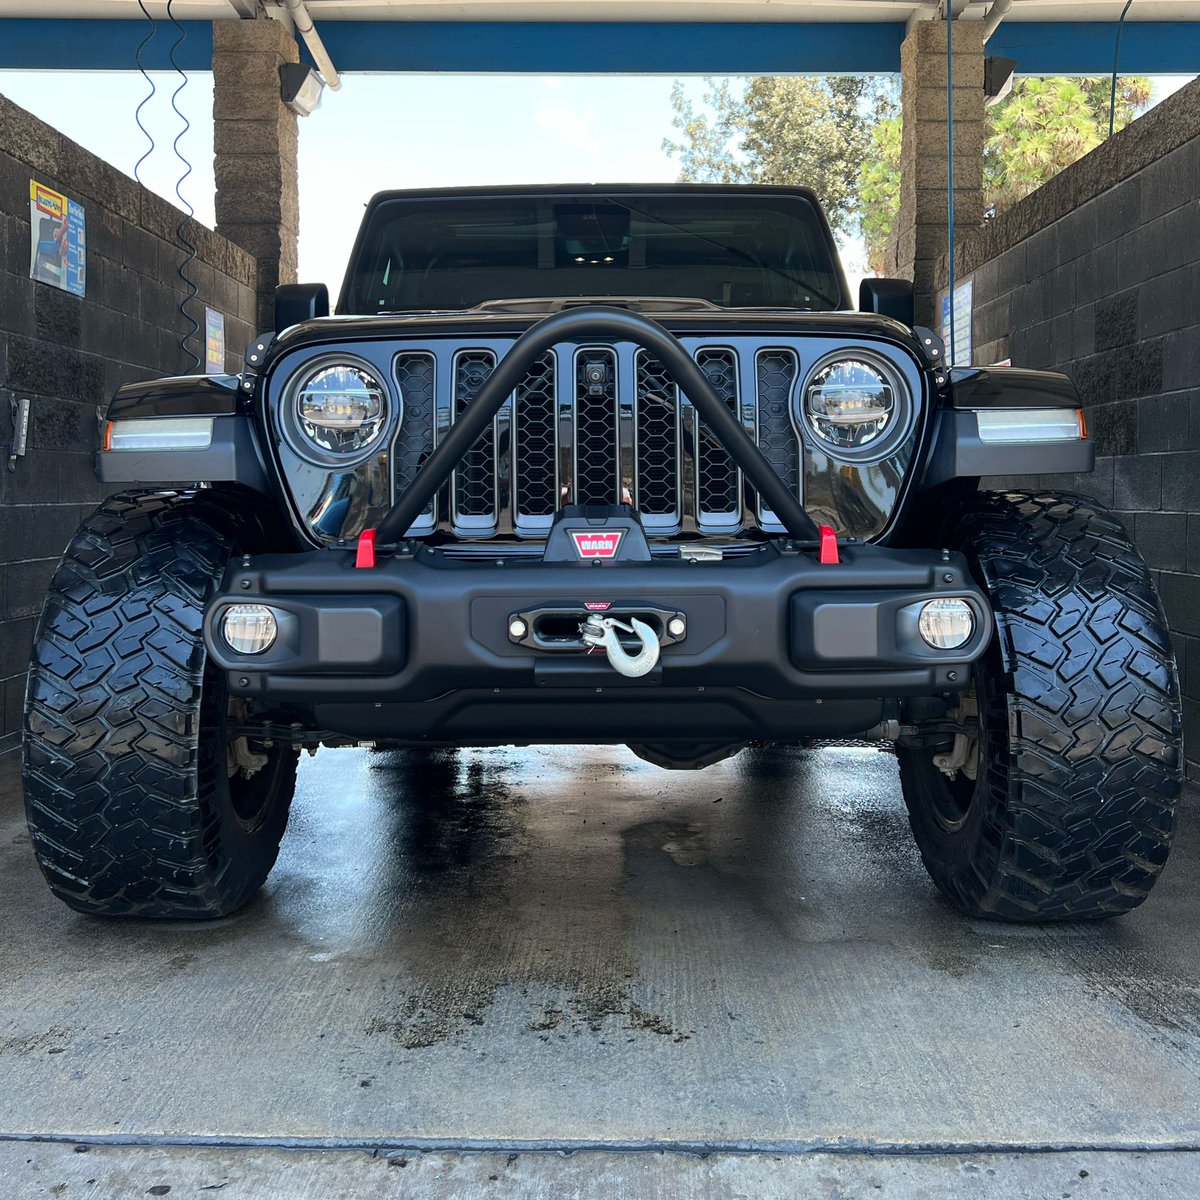 Mean muggin gotta love a DIY car wash 🧼 @7SlotSociety @Jeep_SevenSlot #JeepGladiator #jeep #jeeplife @THEJeepMafia @RubiconExpress1 @Thejeepboss @ItsaJeepWorld